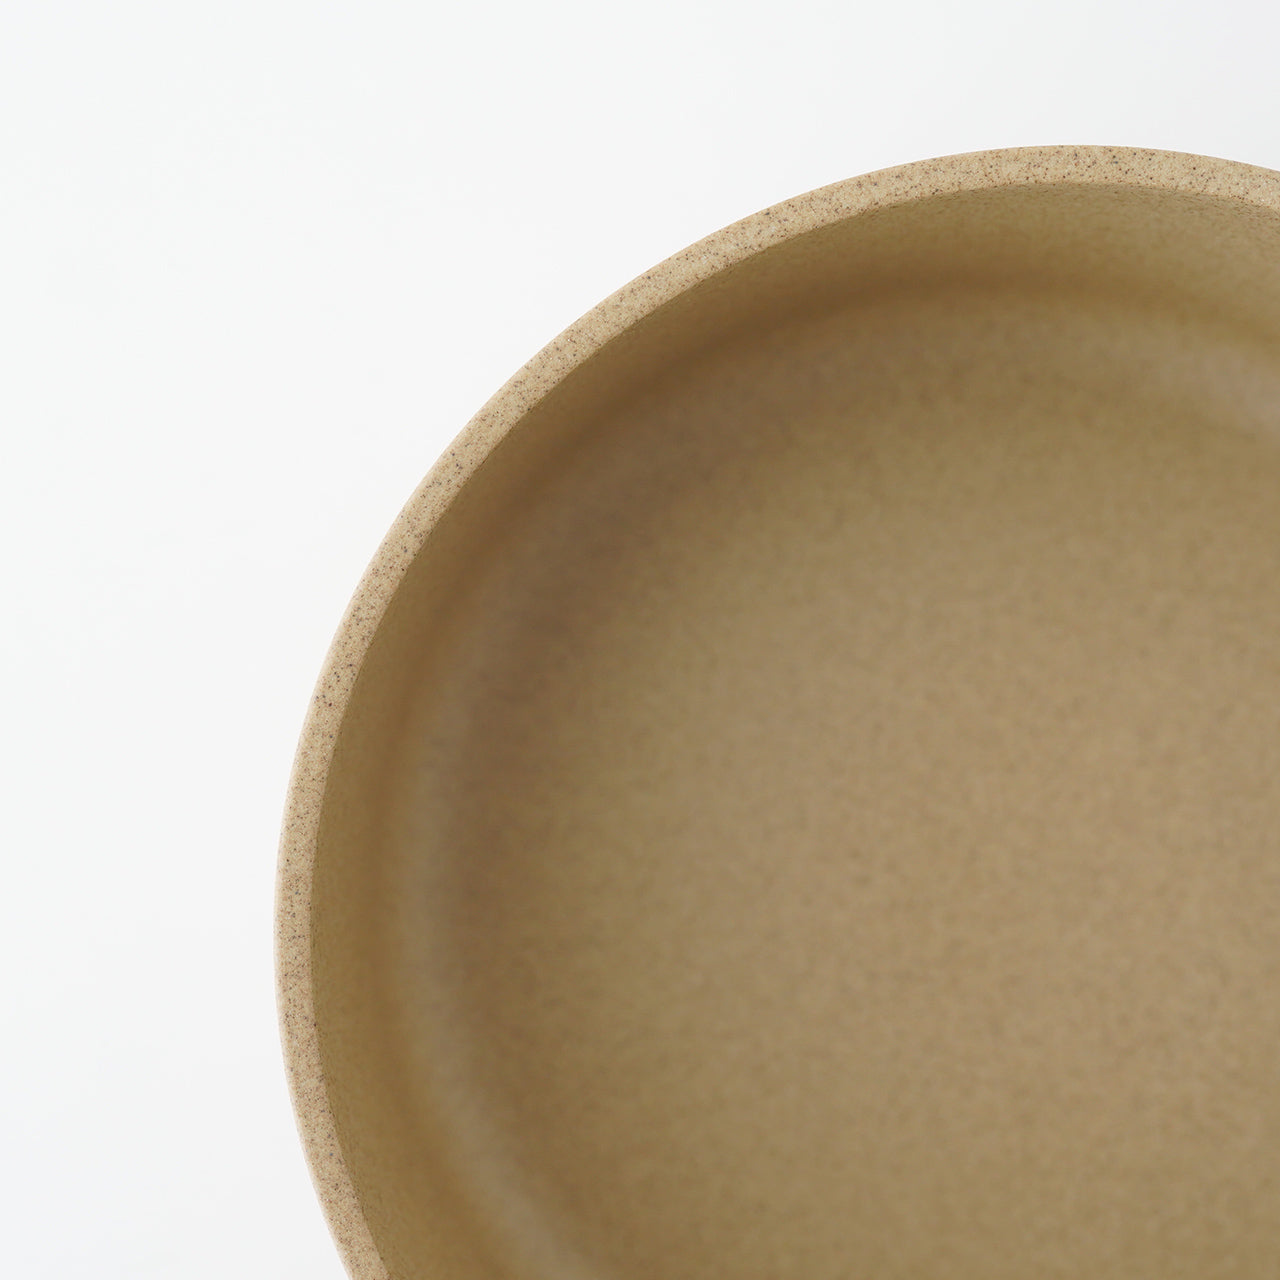 HASAMI PORCELAIN ハサミポーセリン ボウル Bowl 14.5cm×5.5cm 波佐見焼き 西海陶器 皿 HP008